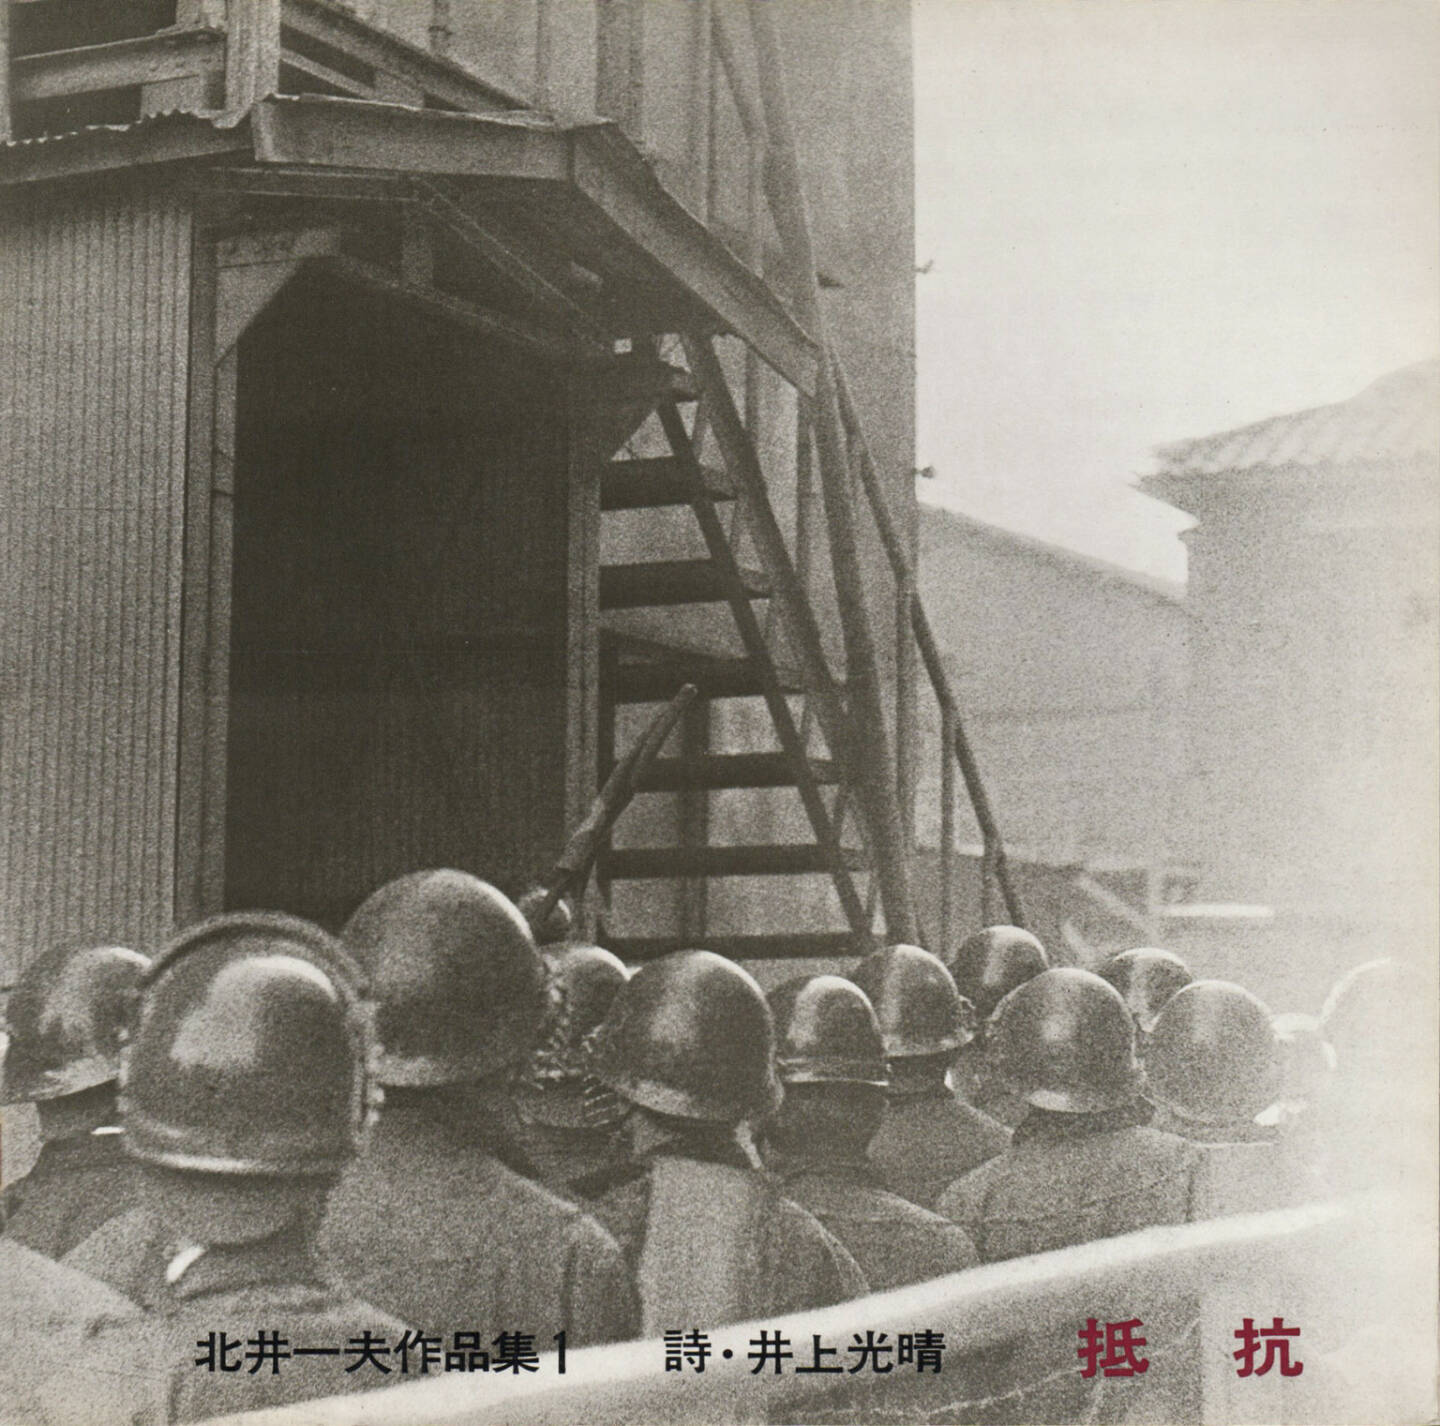 Kazuo Kitai - Teikoh (Resistance, 北井一夫 抵抗), Murai-sha 1965, Cover - http://josefchladek.com/book/kazuo_kitai_-_teikoh_resistance